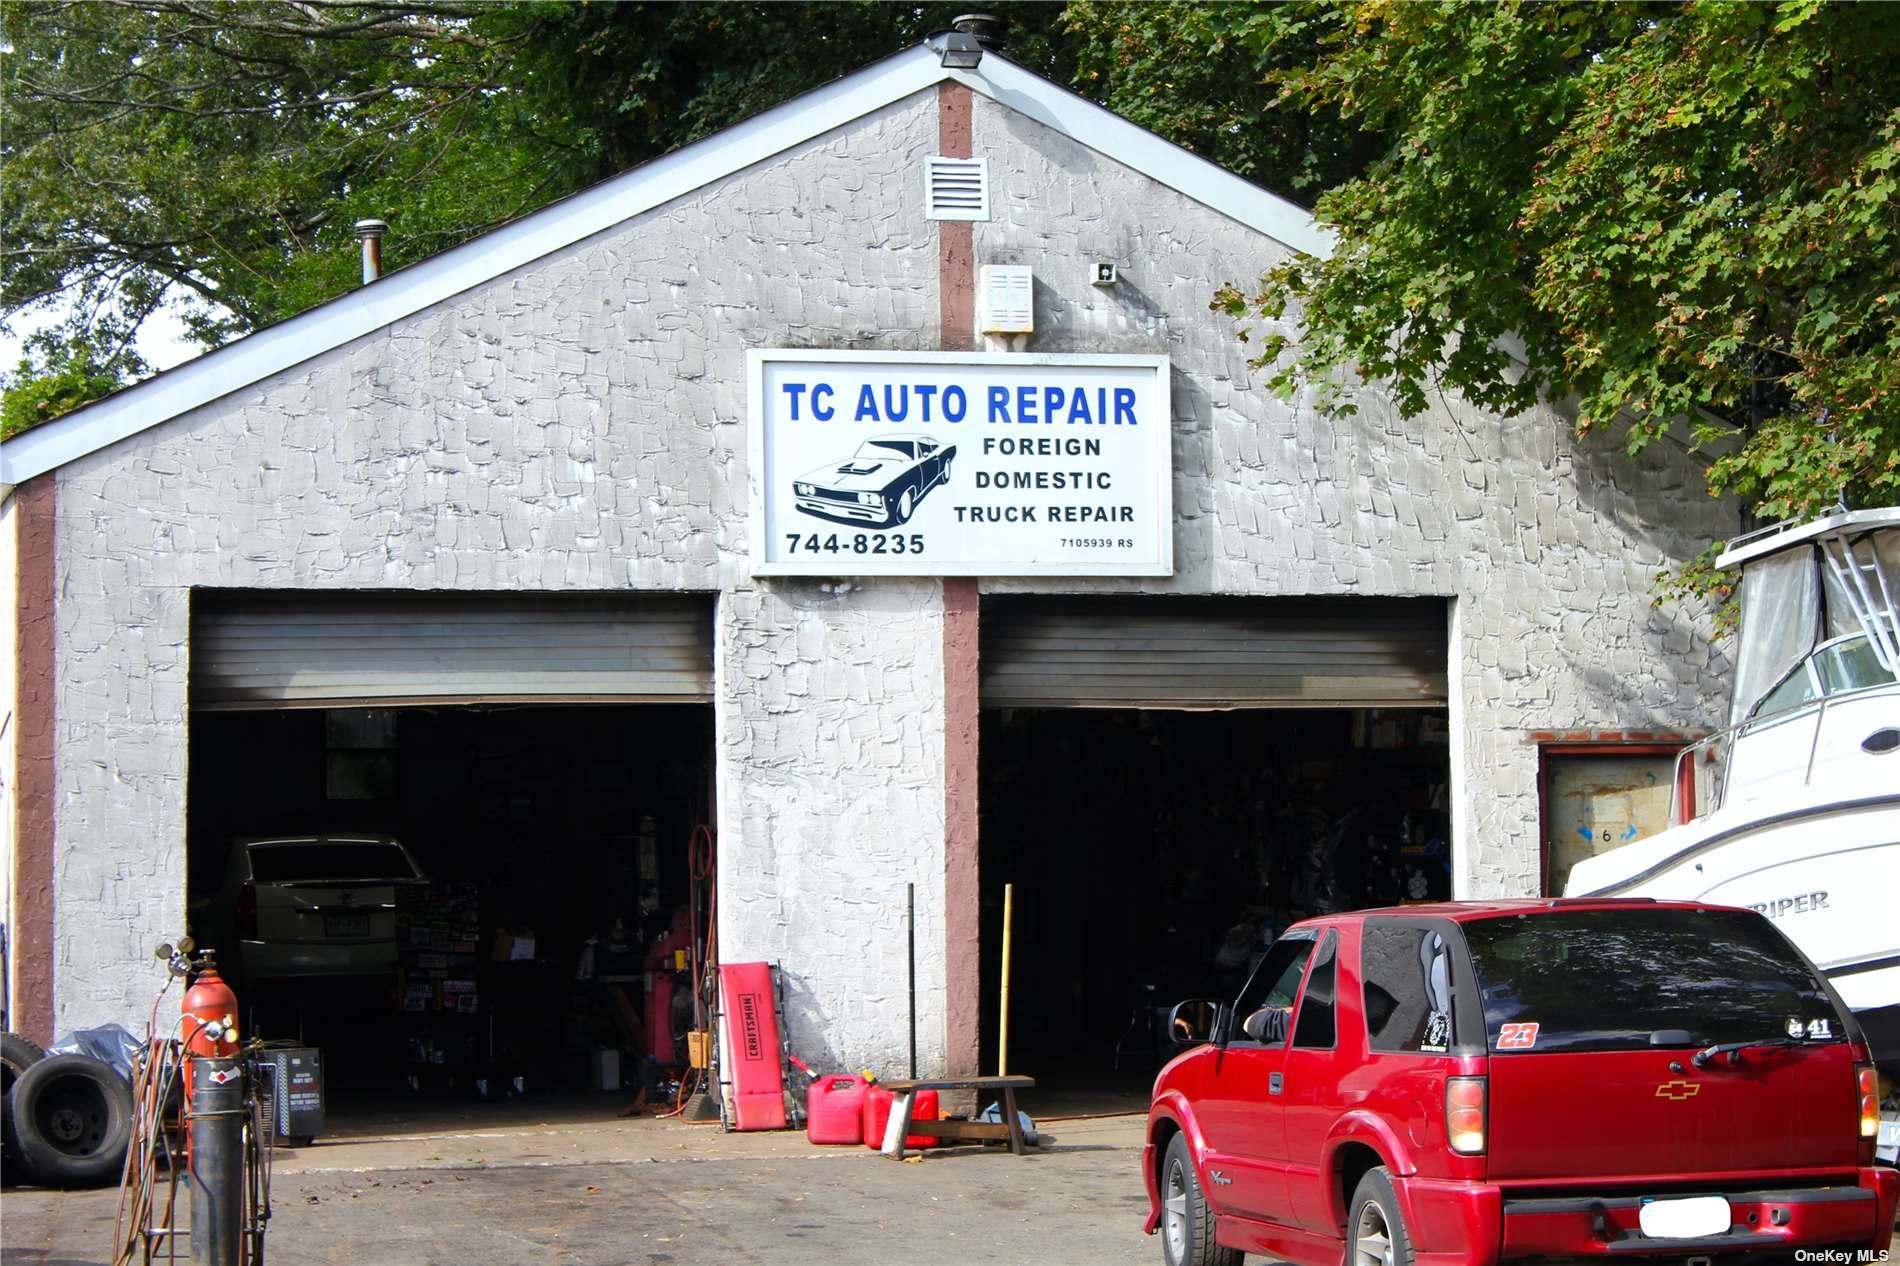 Auto Repair Shop, 1 story building with 2 garage doors.